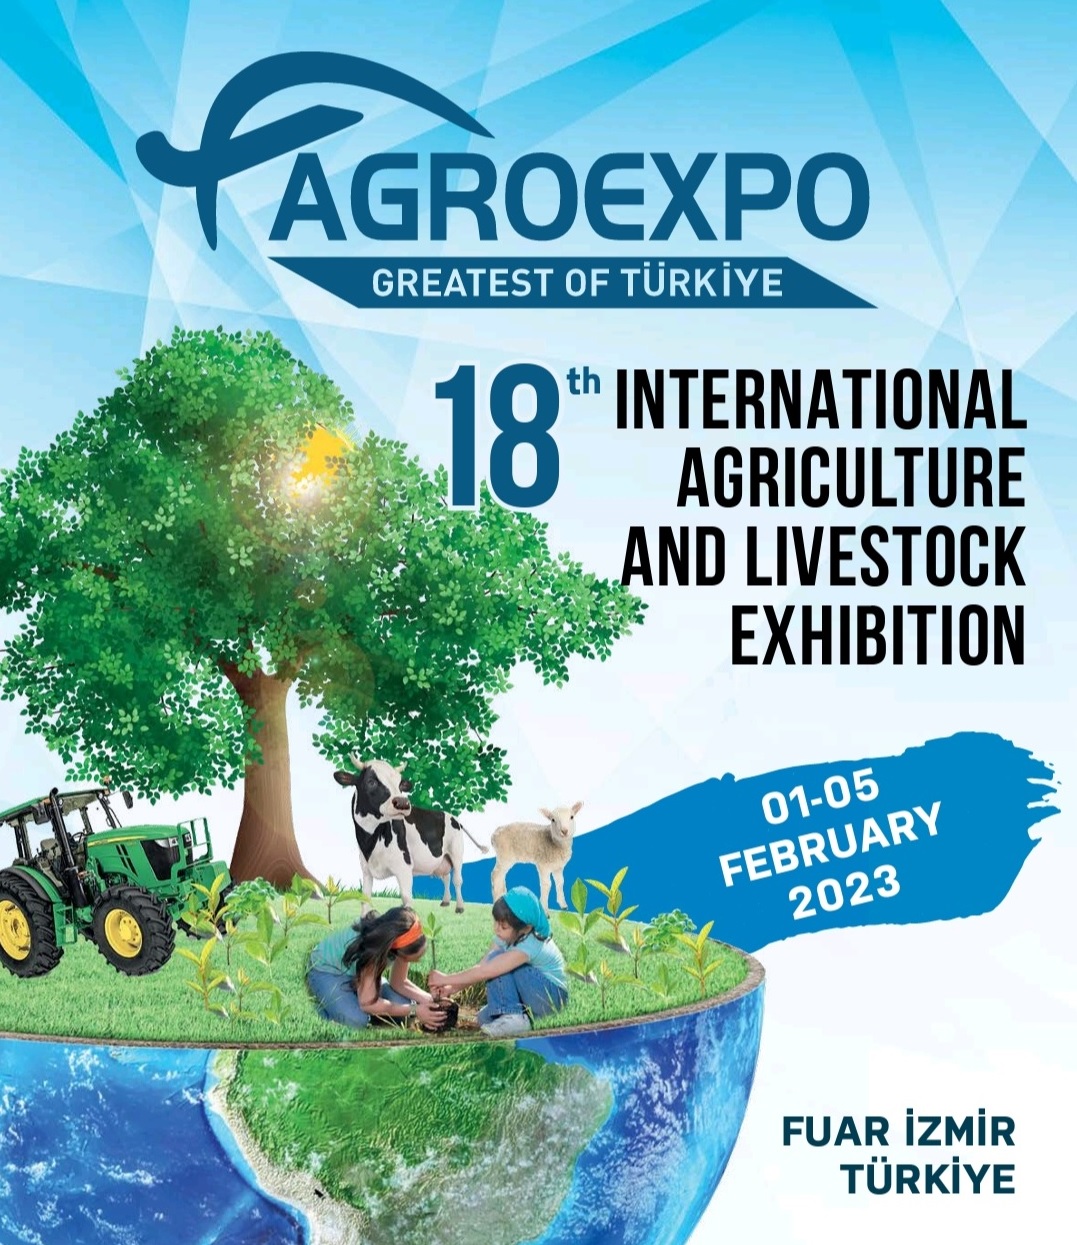 İZMİR AGRO EXPO 2023 Grand Expo